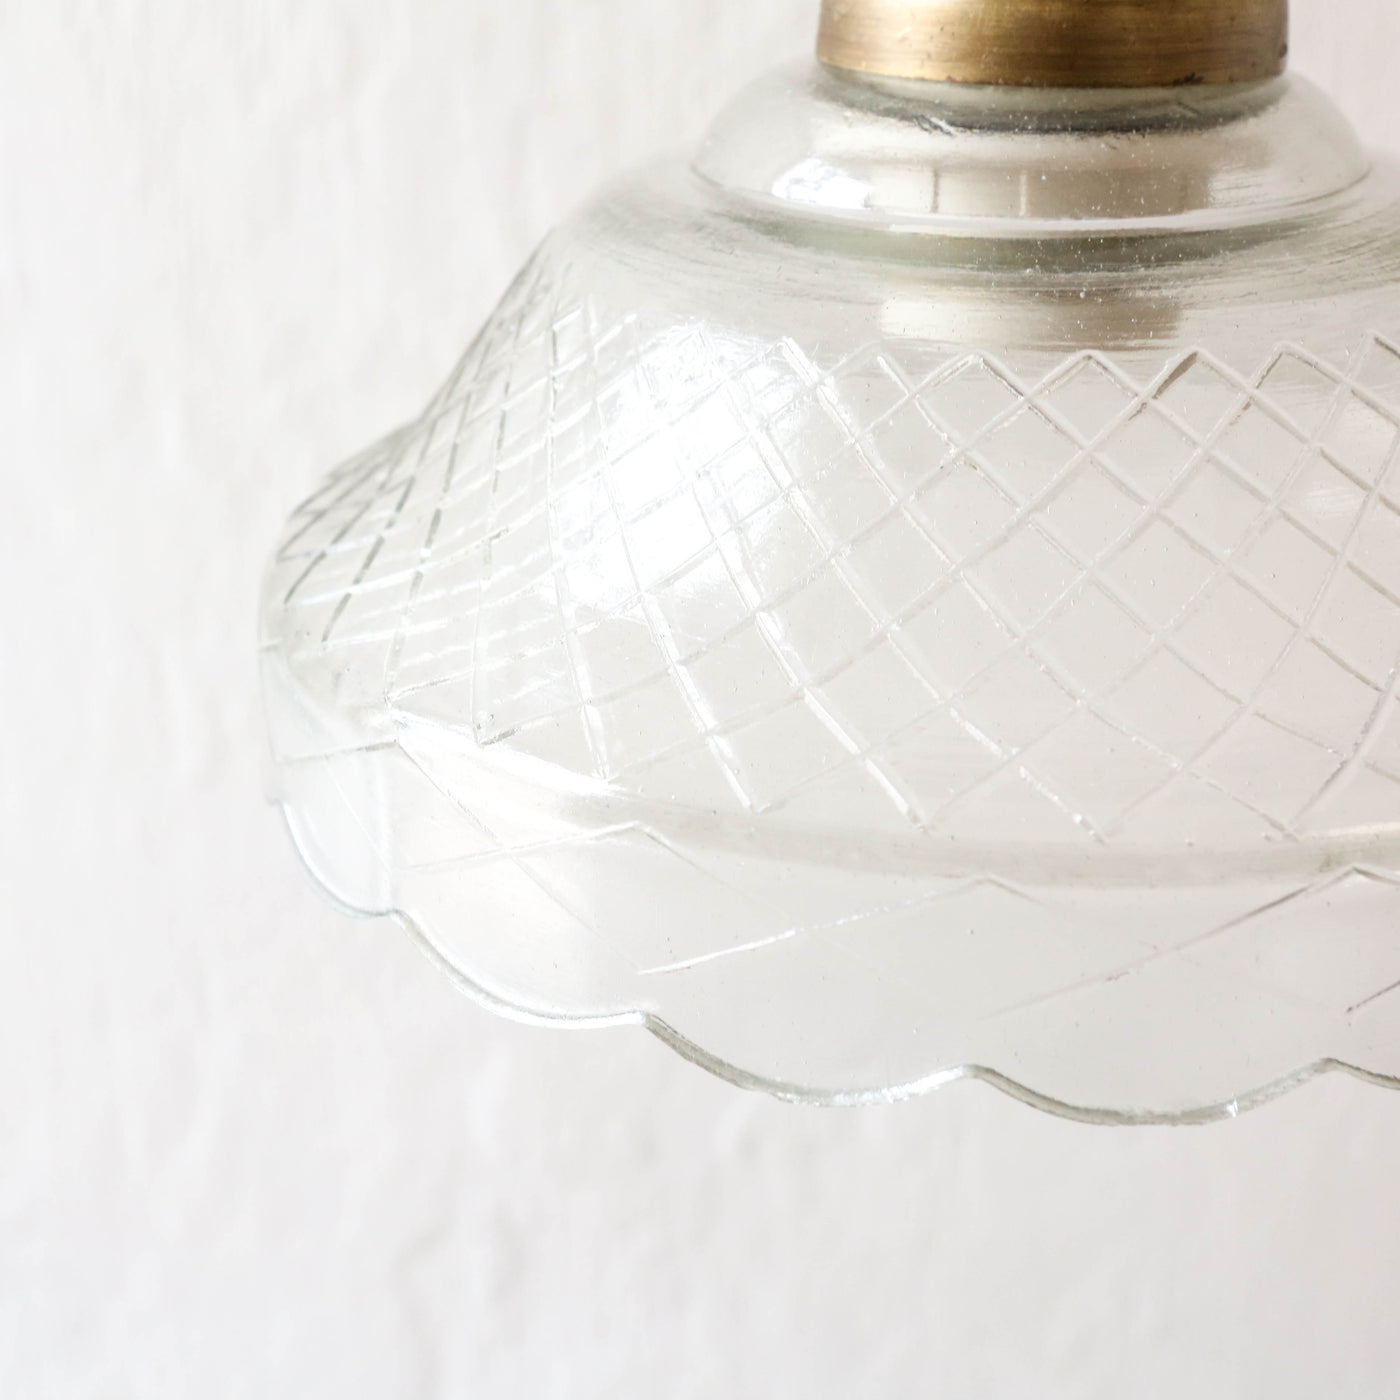 Etched Glass Pendant Lamp 'Greta'